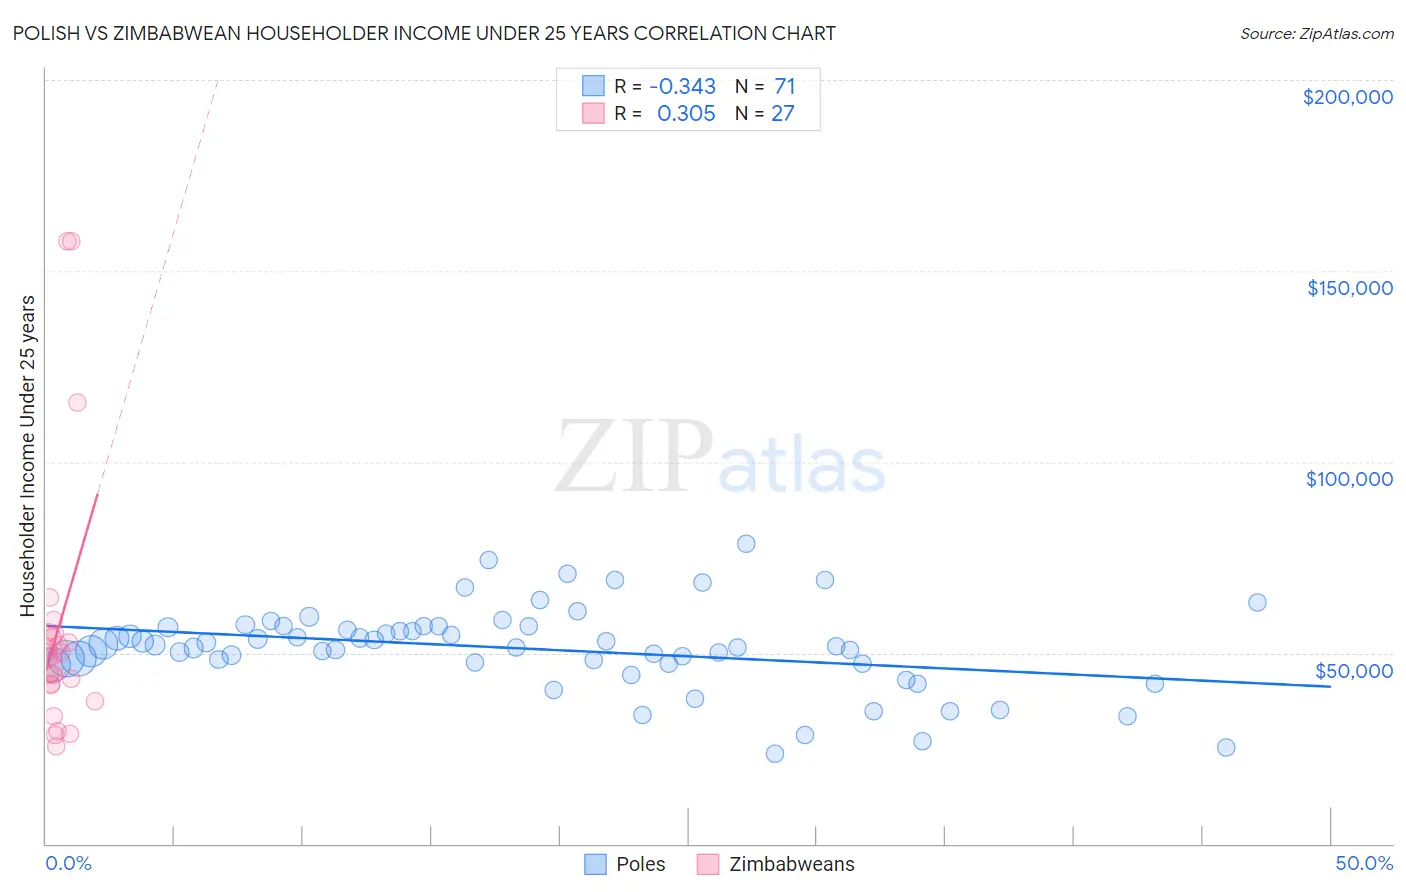 Polish vs Zimbabwean Householder Income Under 25 years